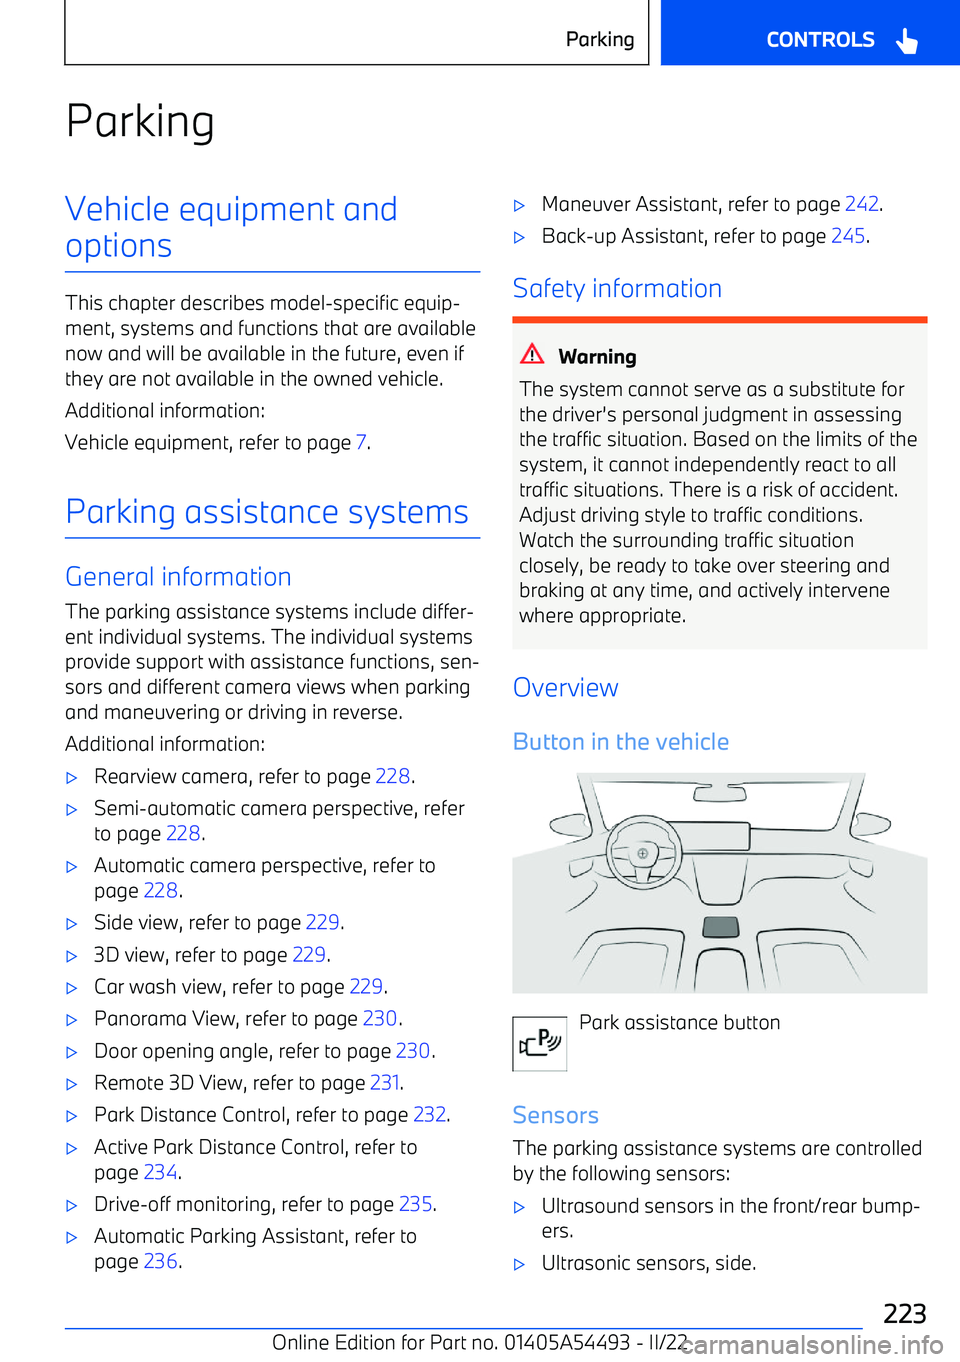 BMW IX 2022 User Guide ParkingVehicle equipment andoptions
This chapter describes model